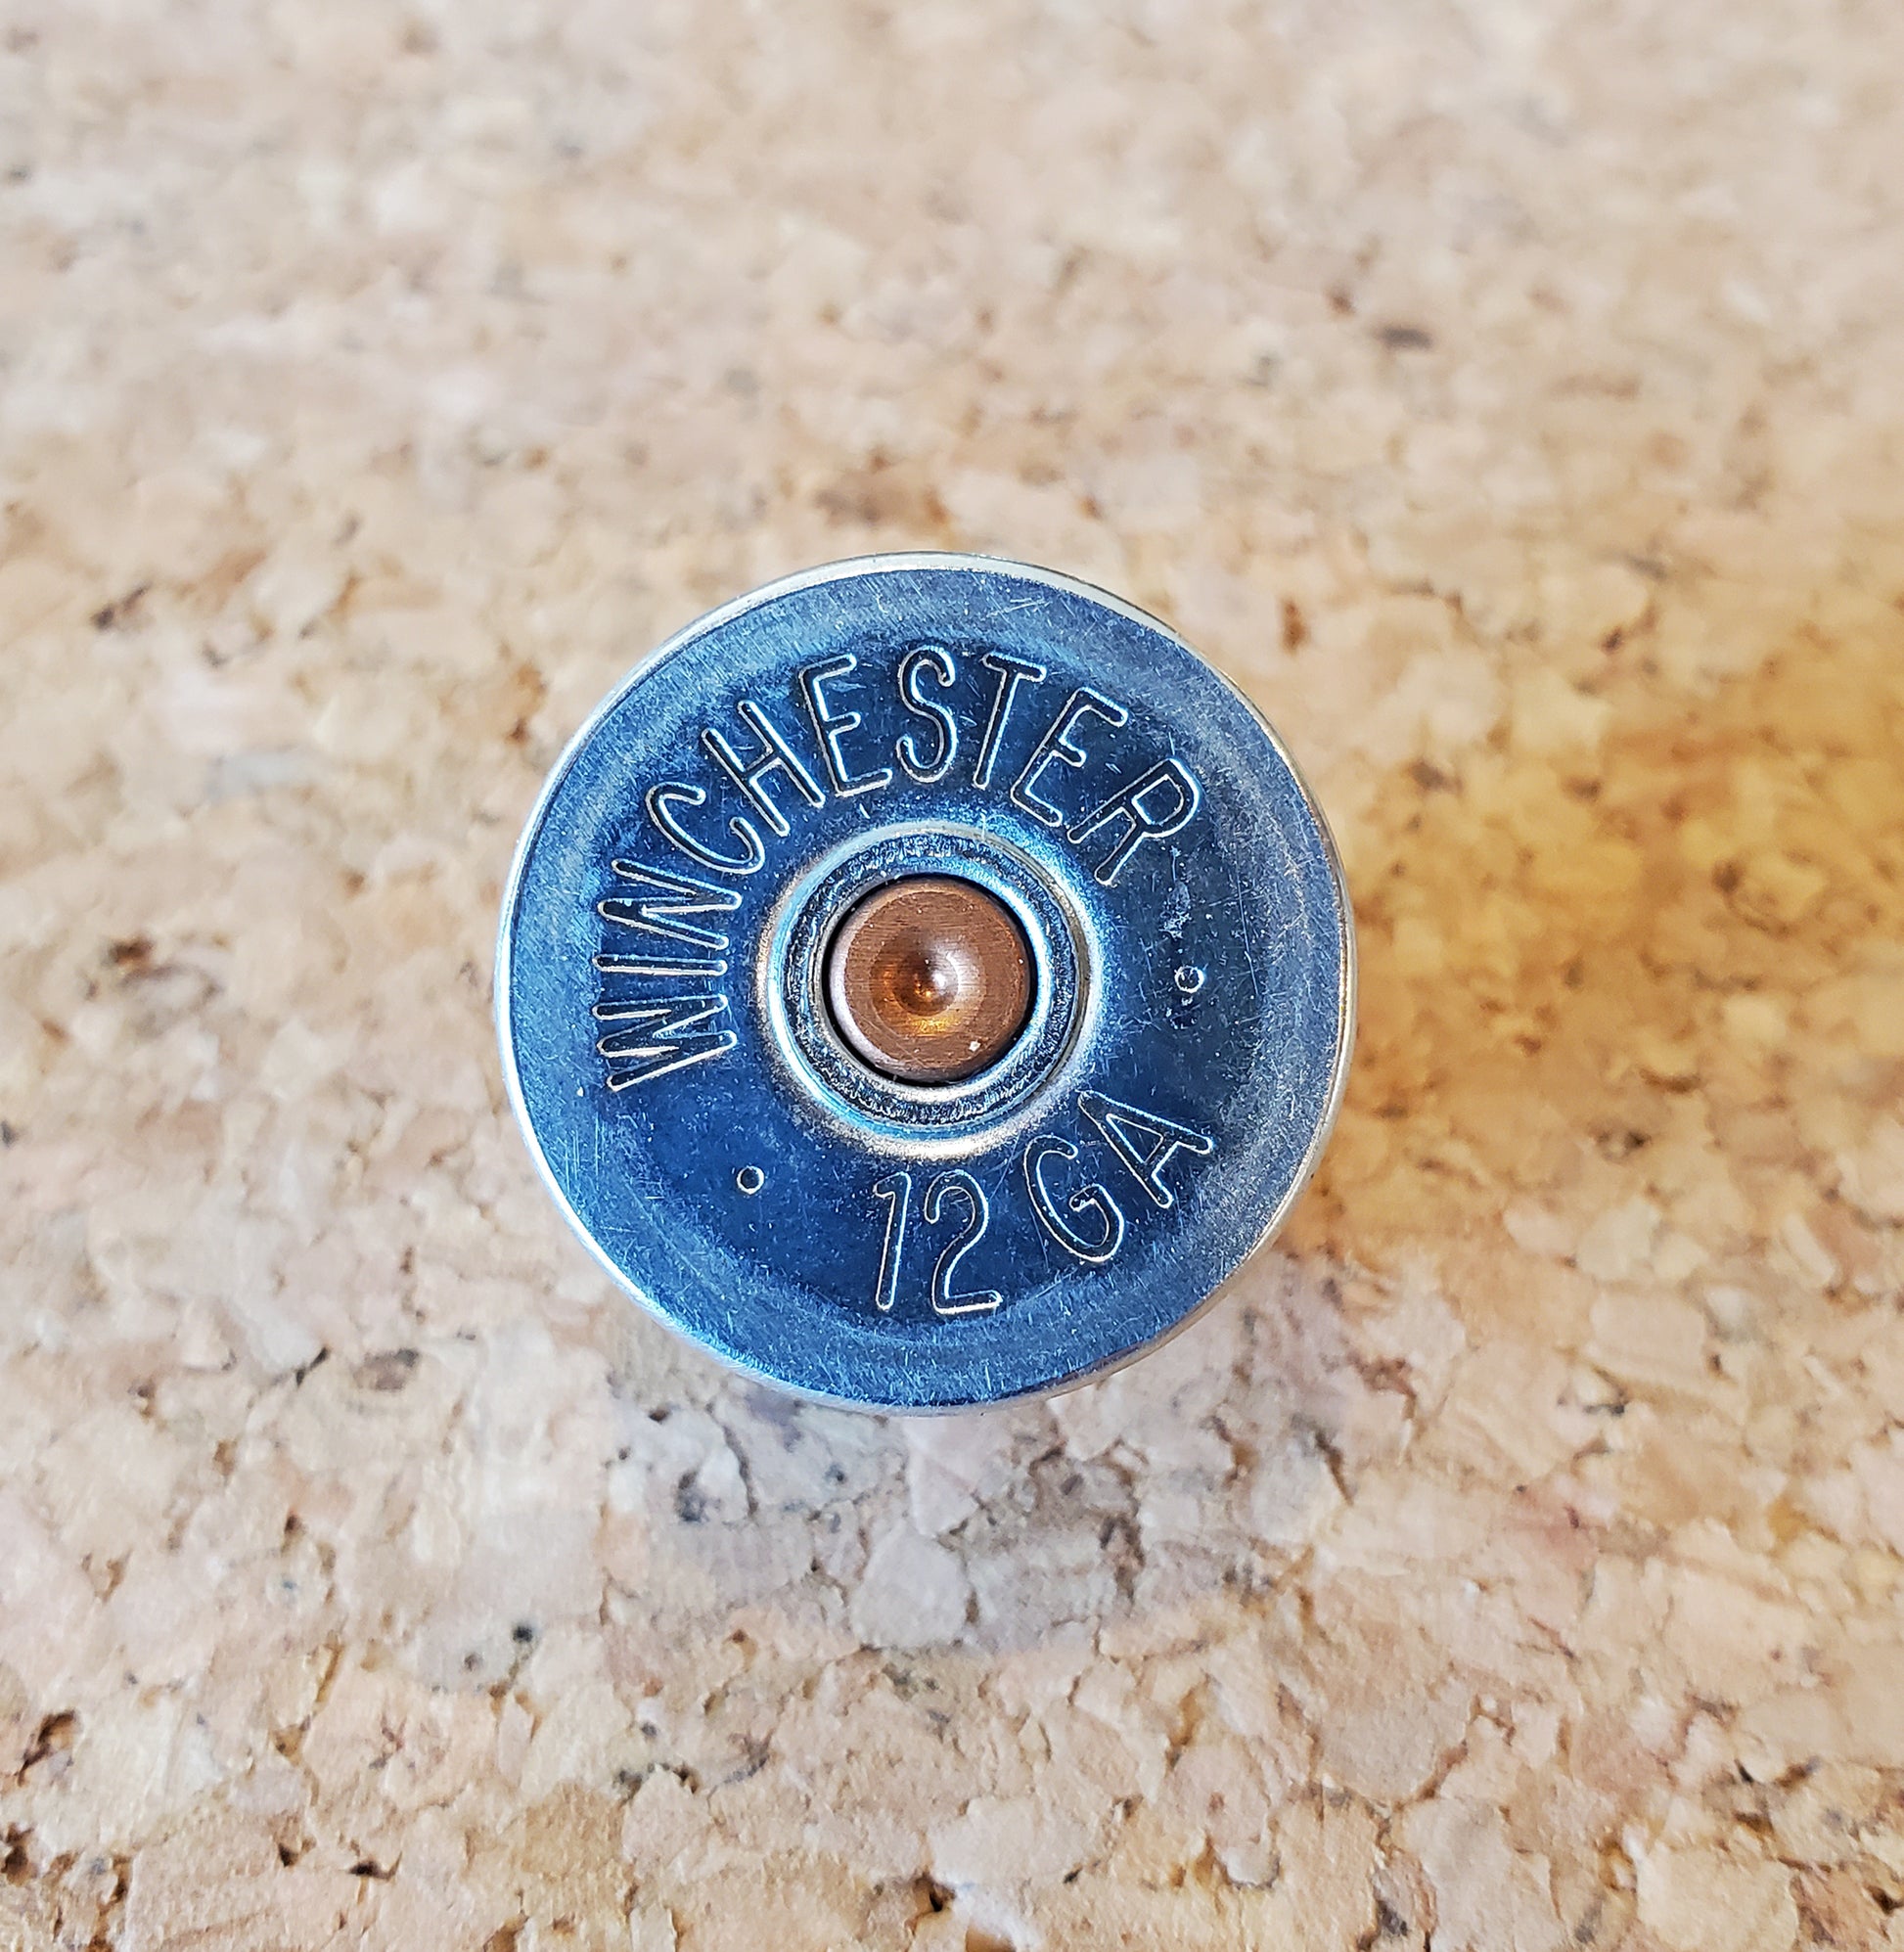 12 Gauge Shotgun Shell Push Pin front